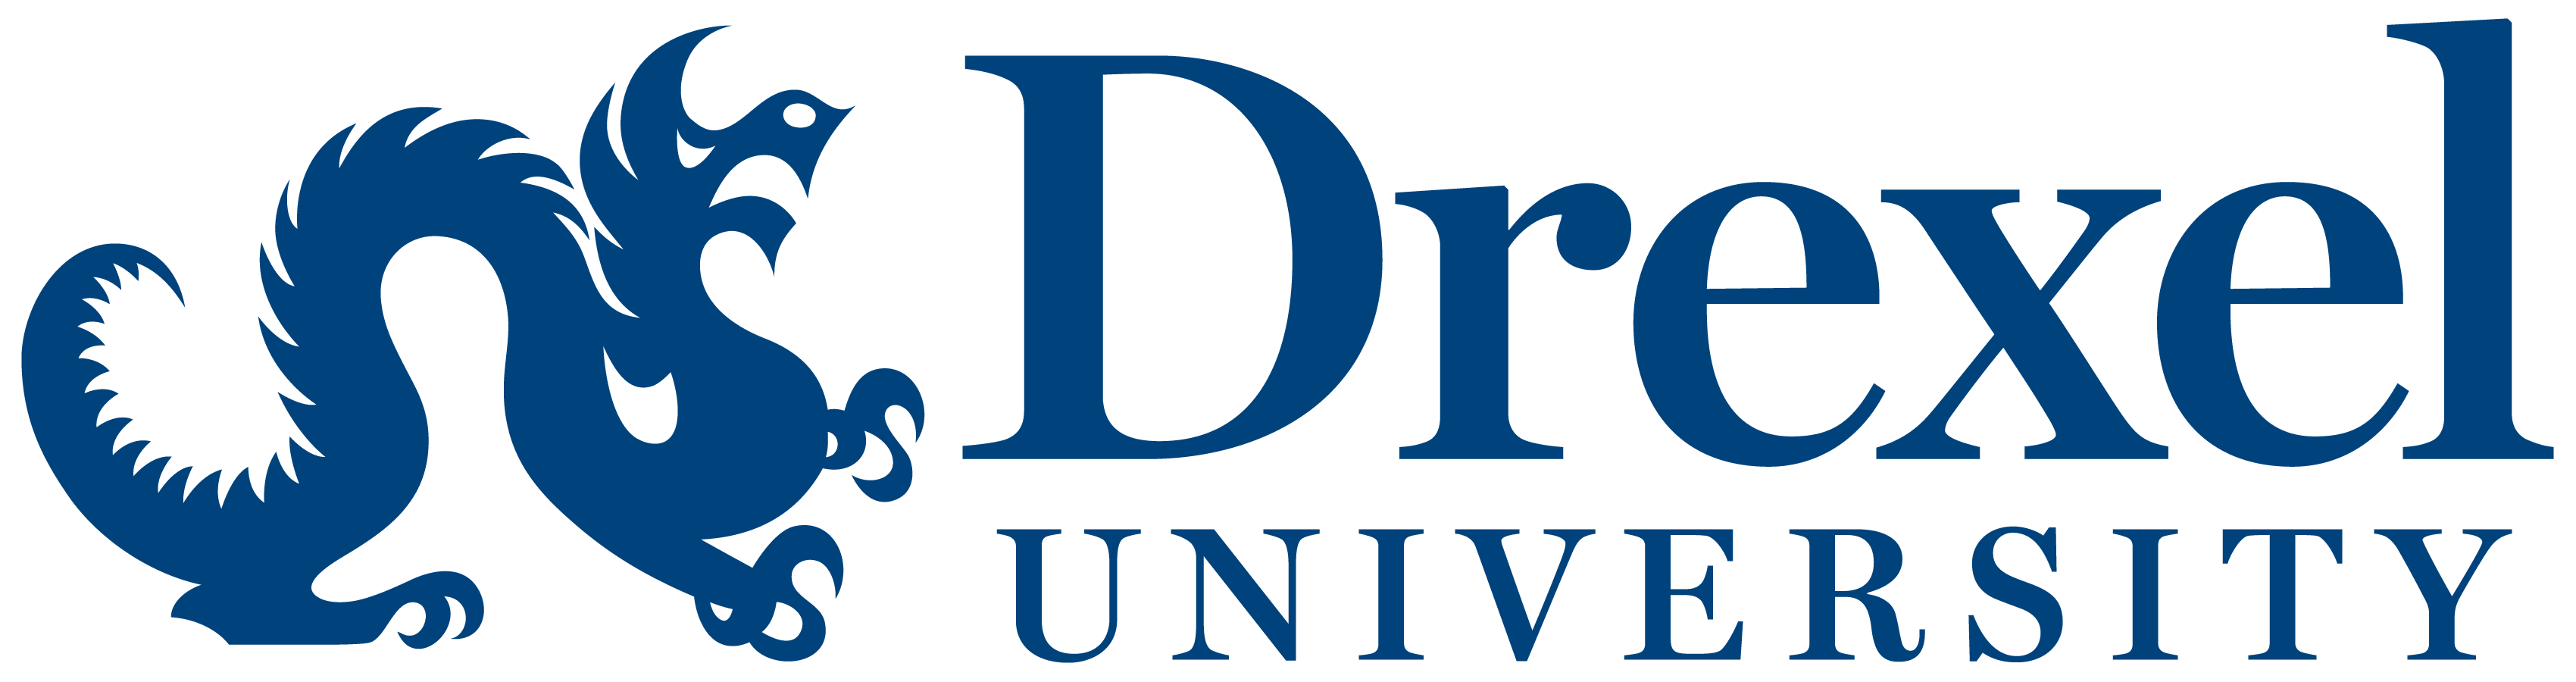 Drexel-logo-lg